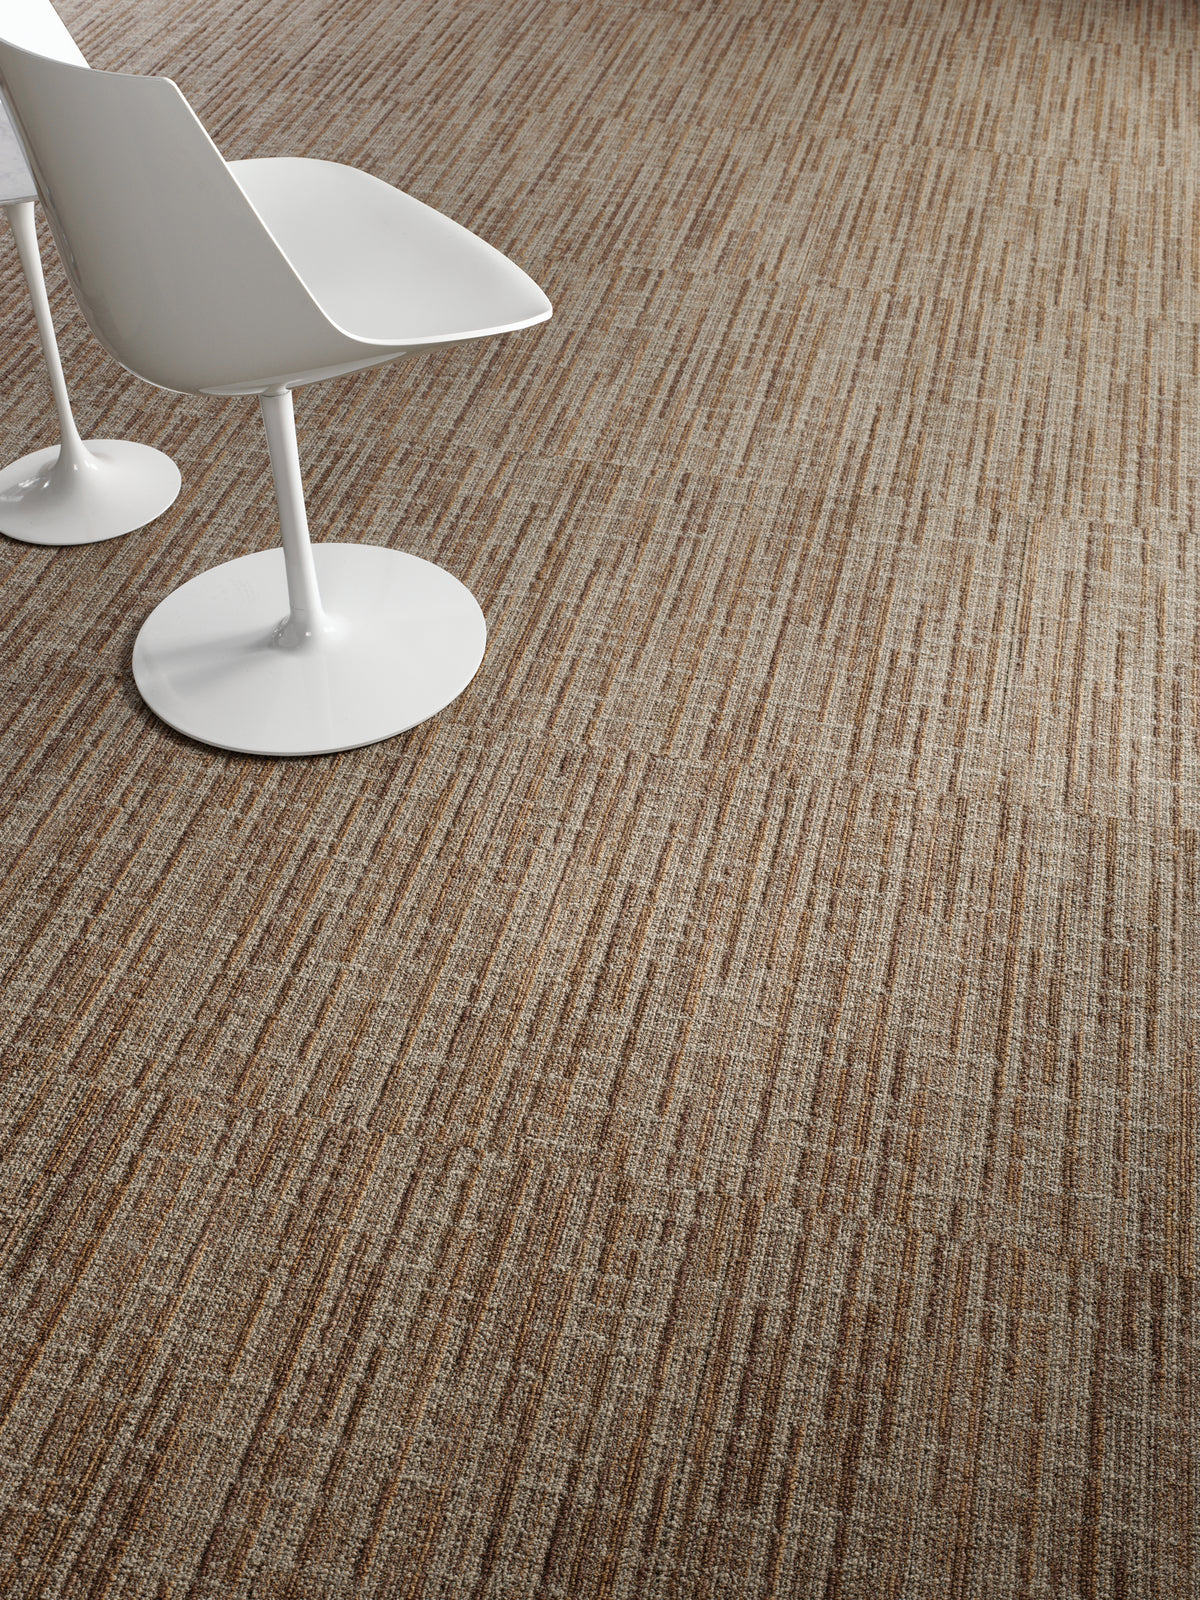 Mohawk Group - Mind Over Matter - Forward Vision - Commercial Carpet Tile - Mastery